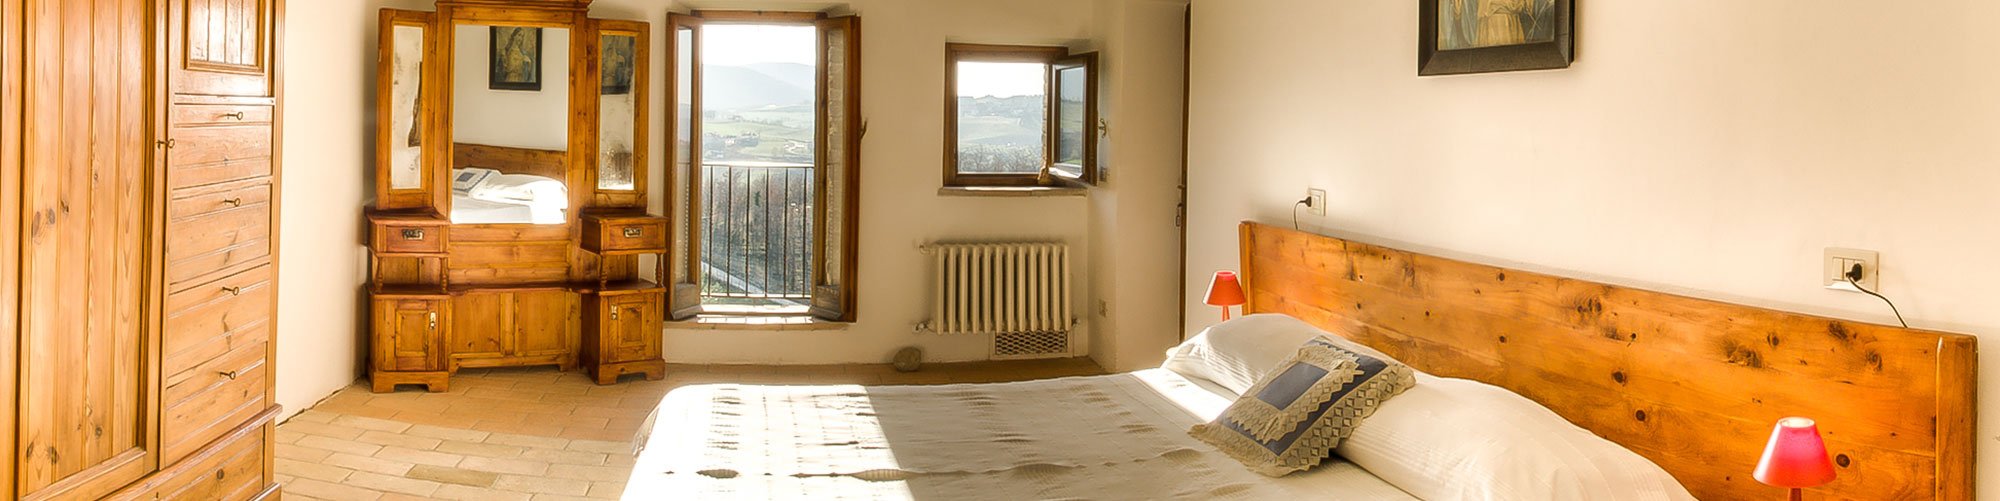 Villa Pianeante in Umbria - Bedroom